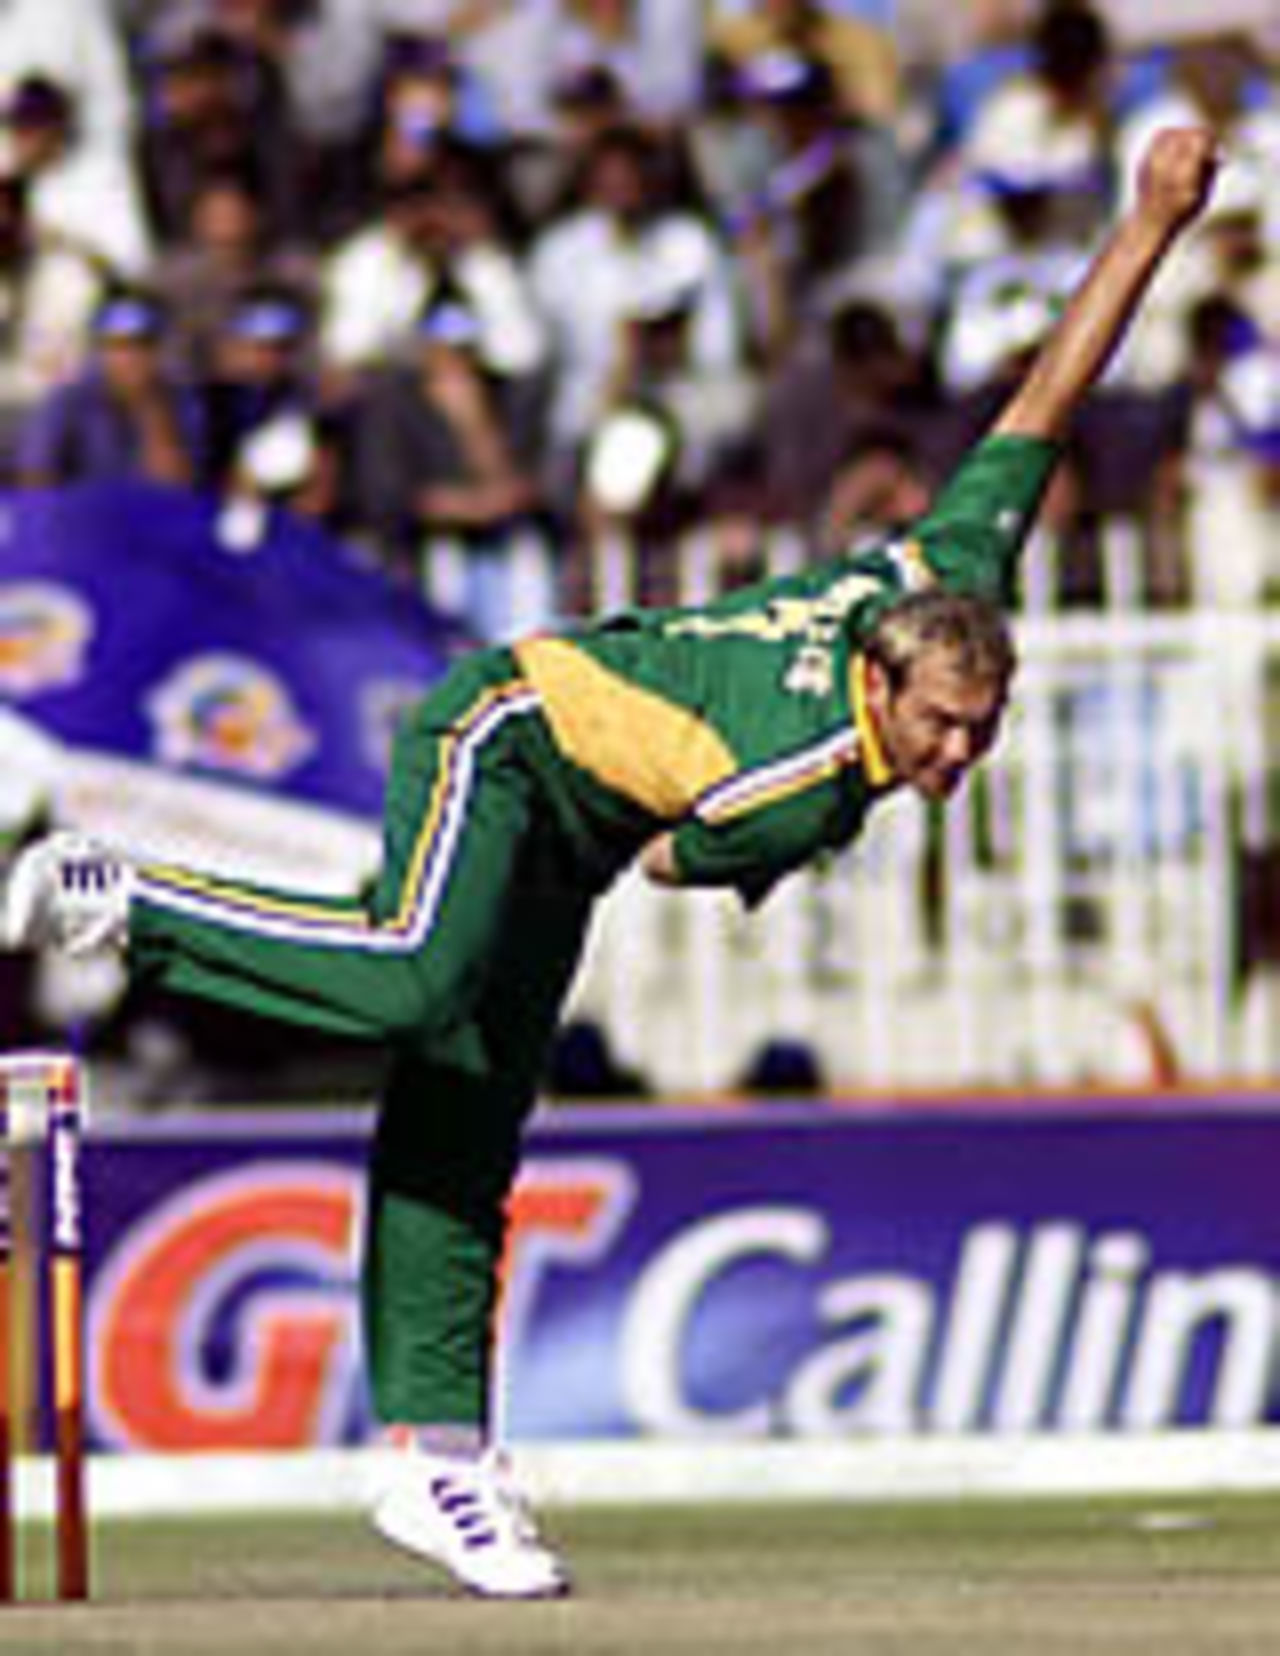 Jacques Kallis in bowling action , Pakistan v South Africa, 5th ODI, Rawalpindi, October 12, 2003.